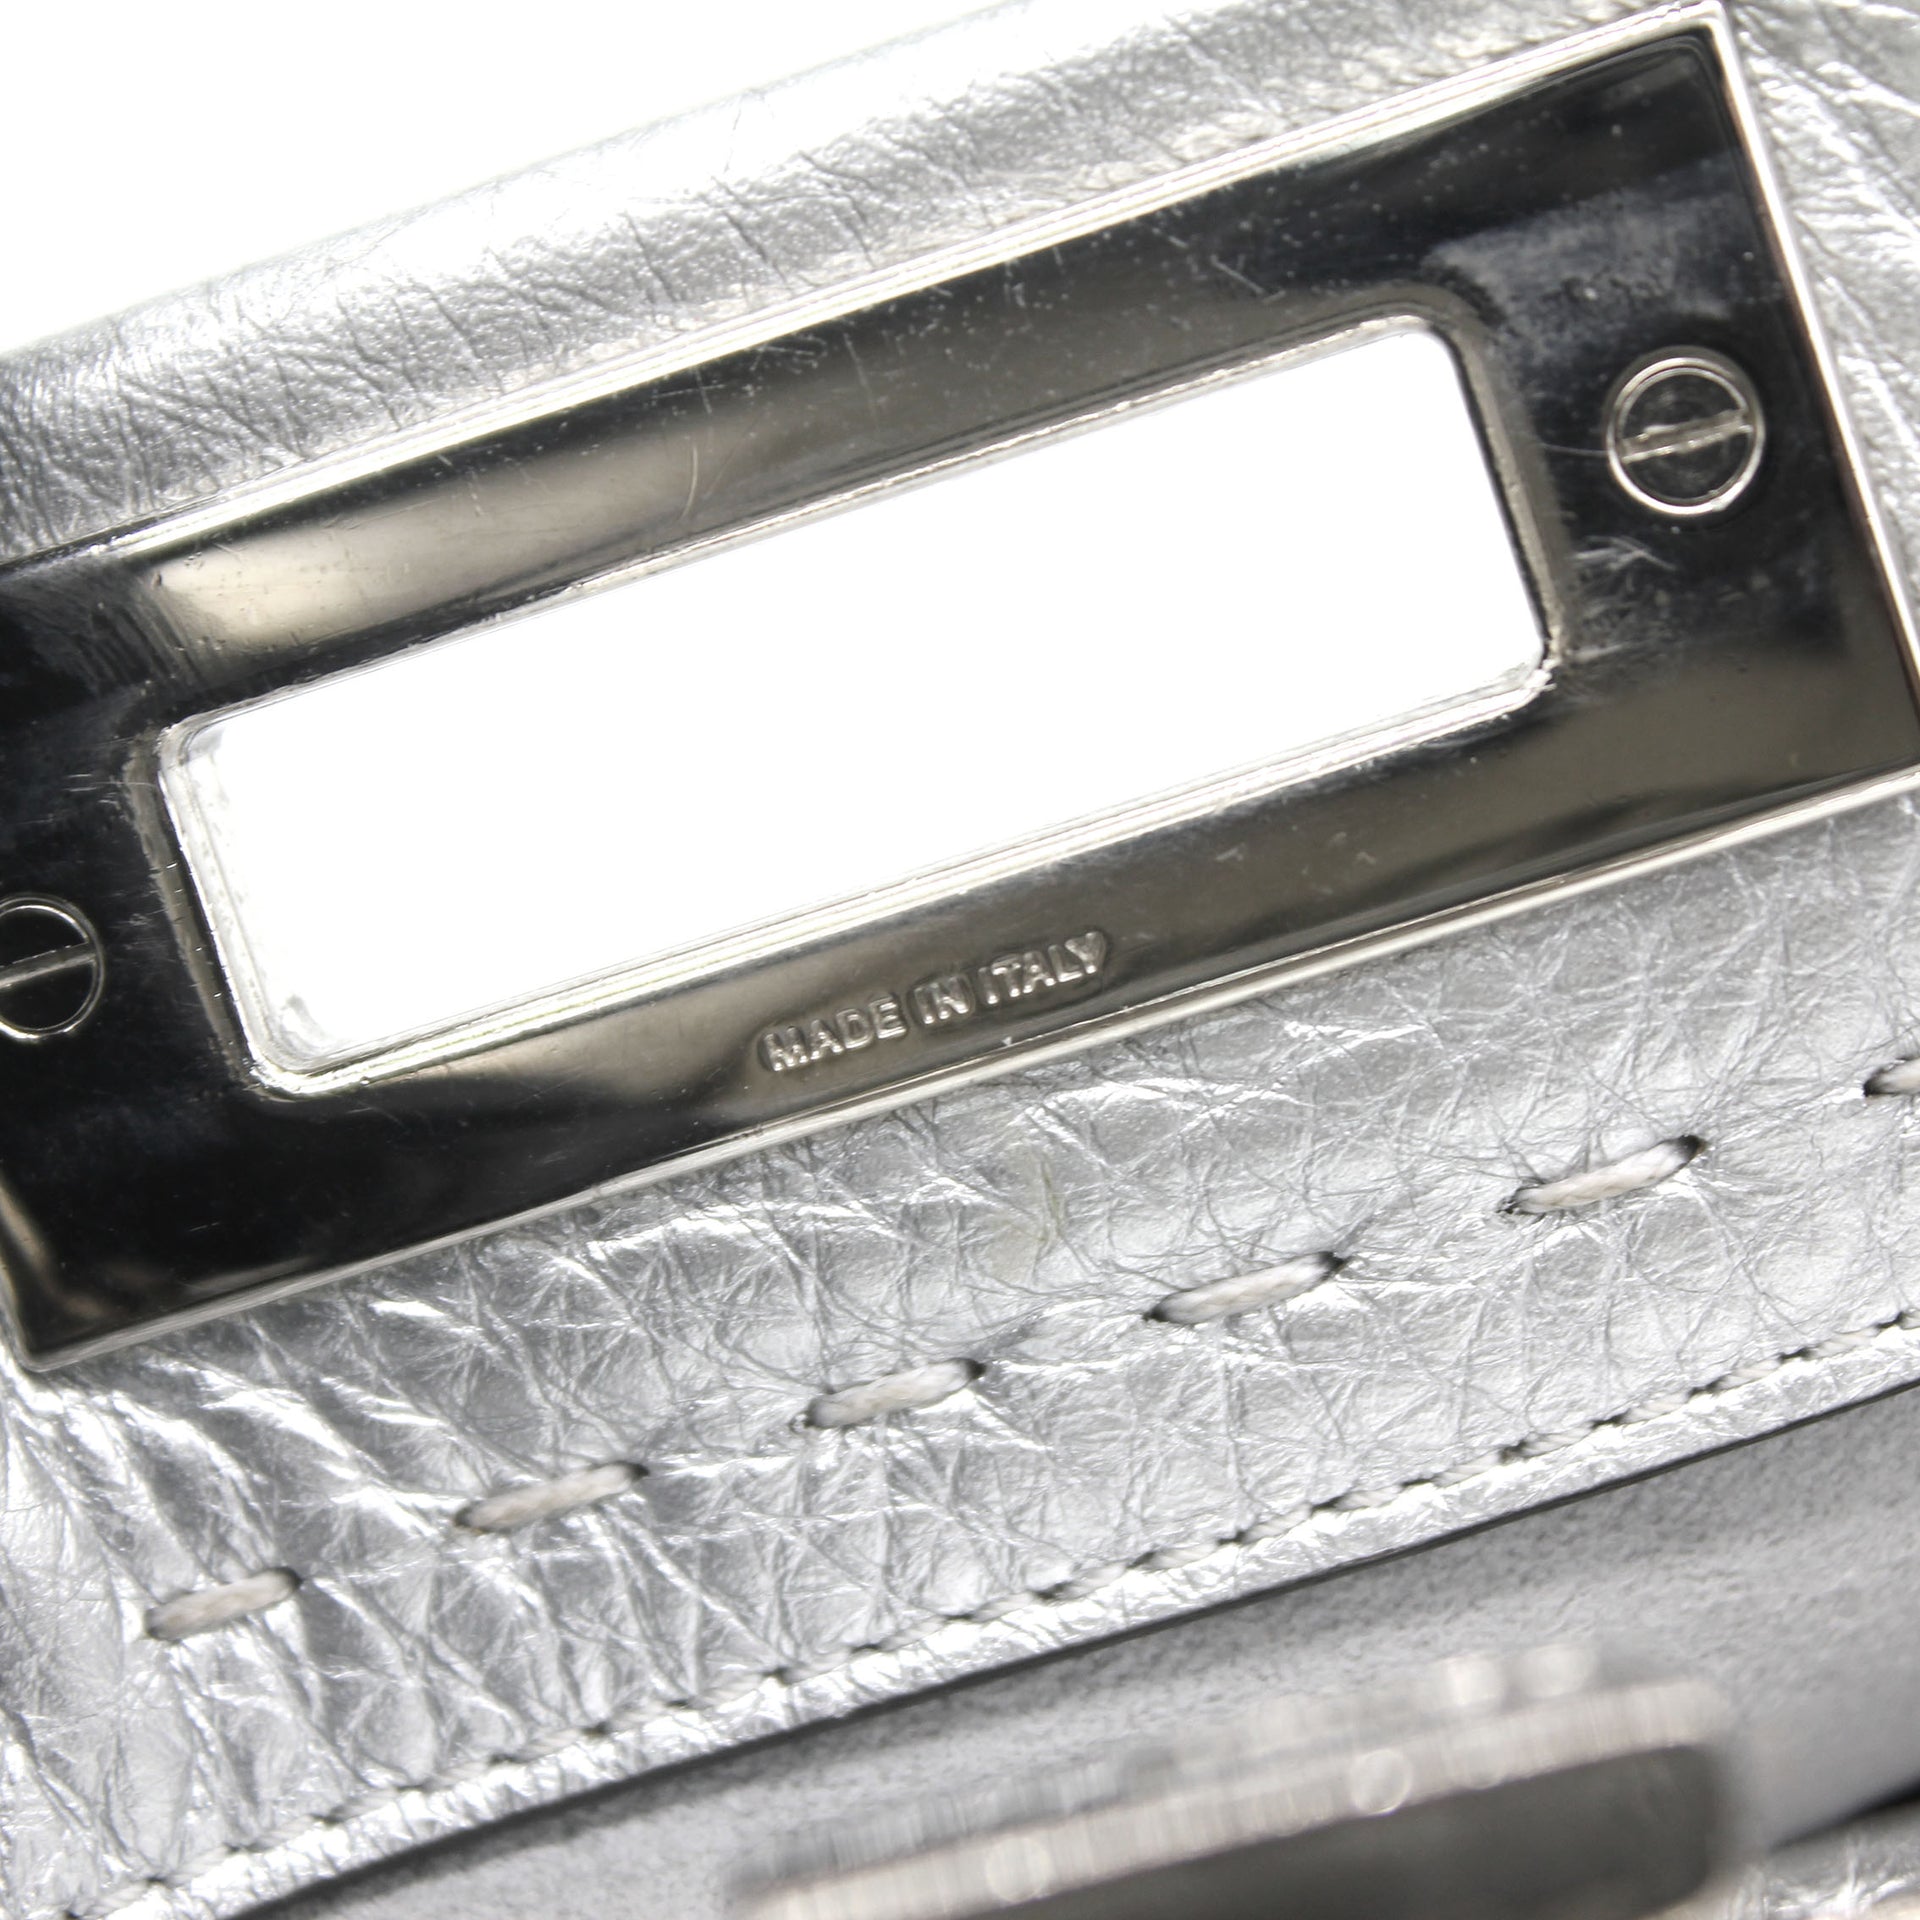 Silver Selleria Leather Medium Peekaboo Top Handle Bag